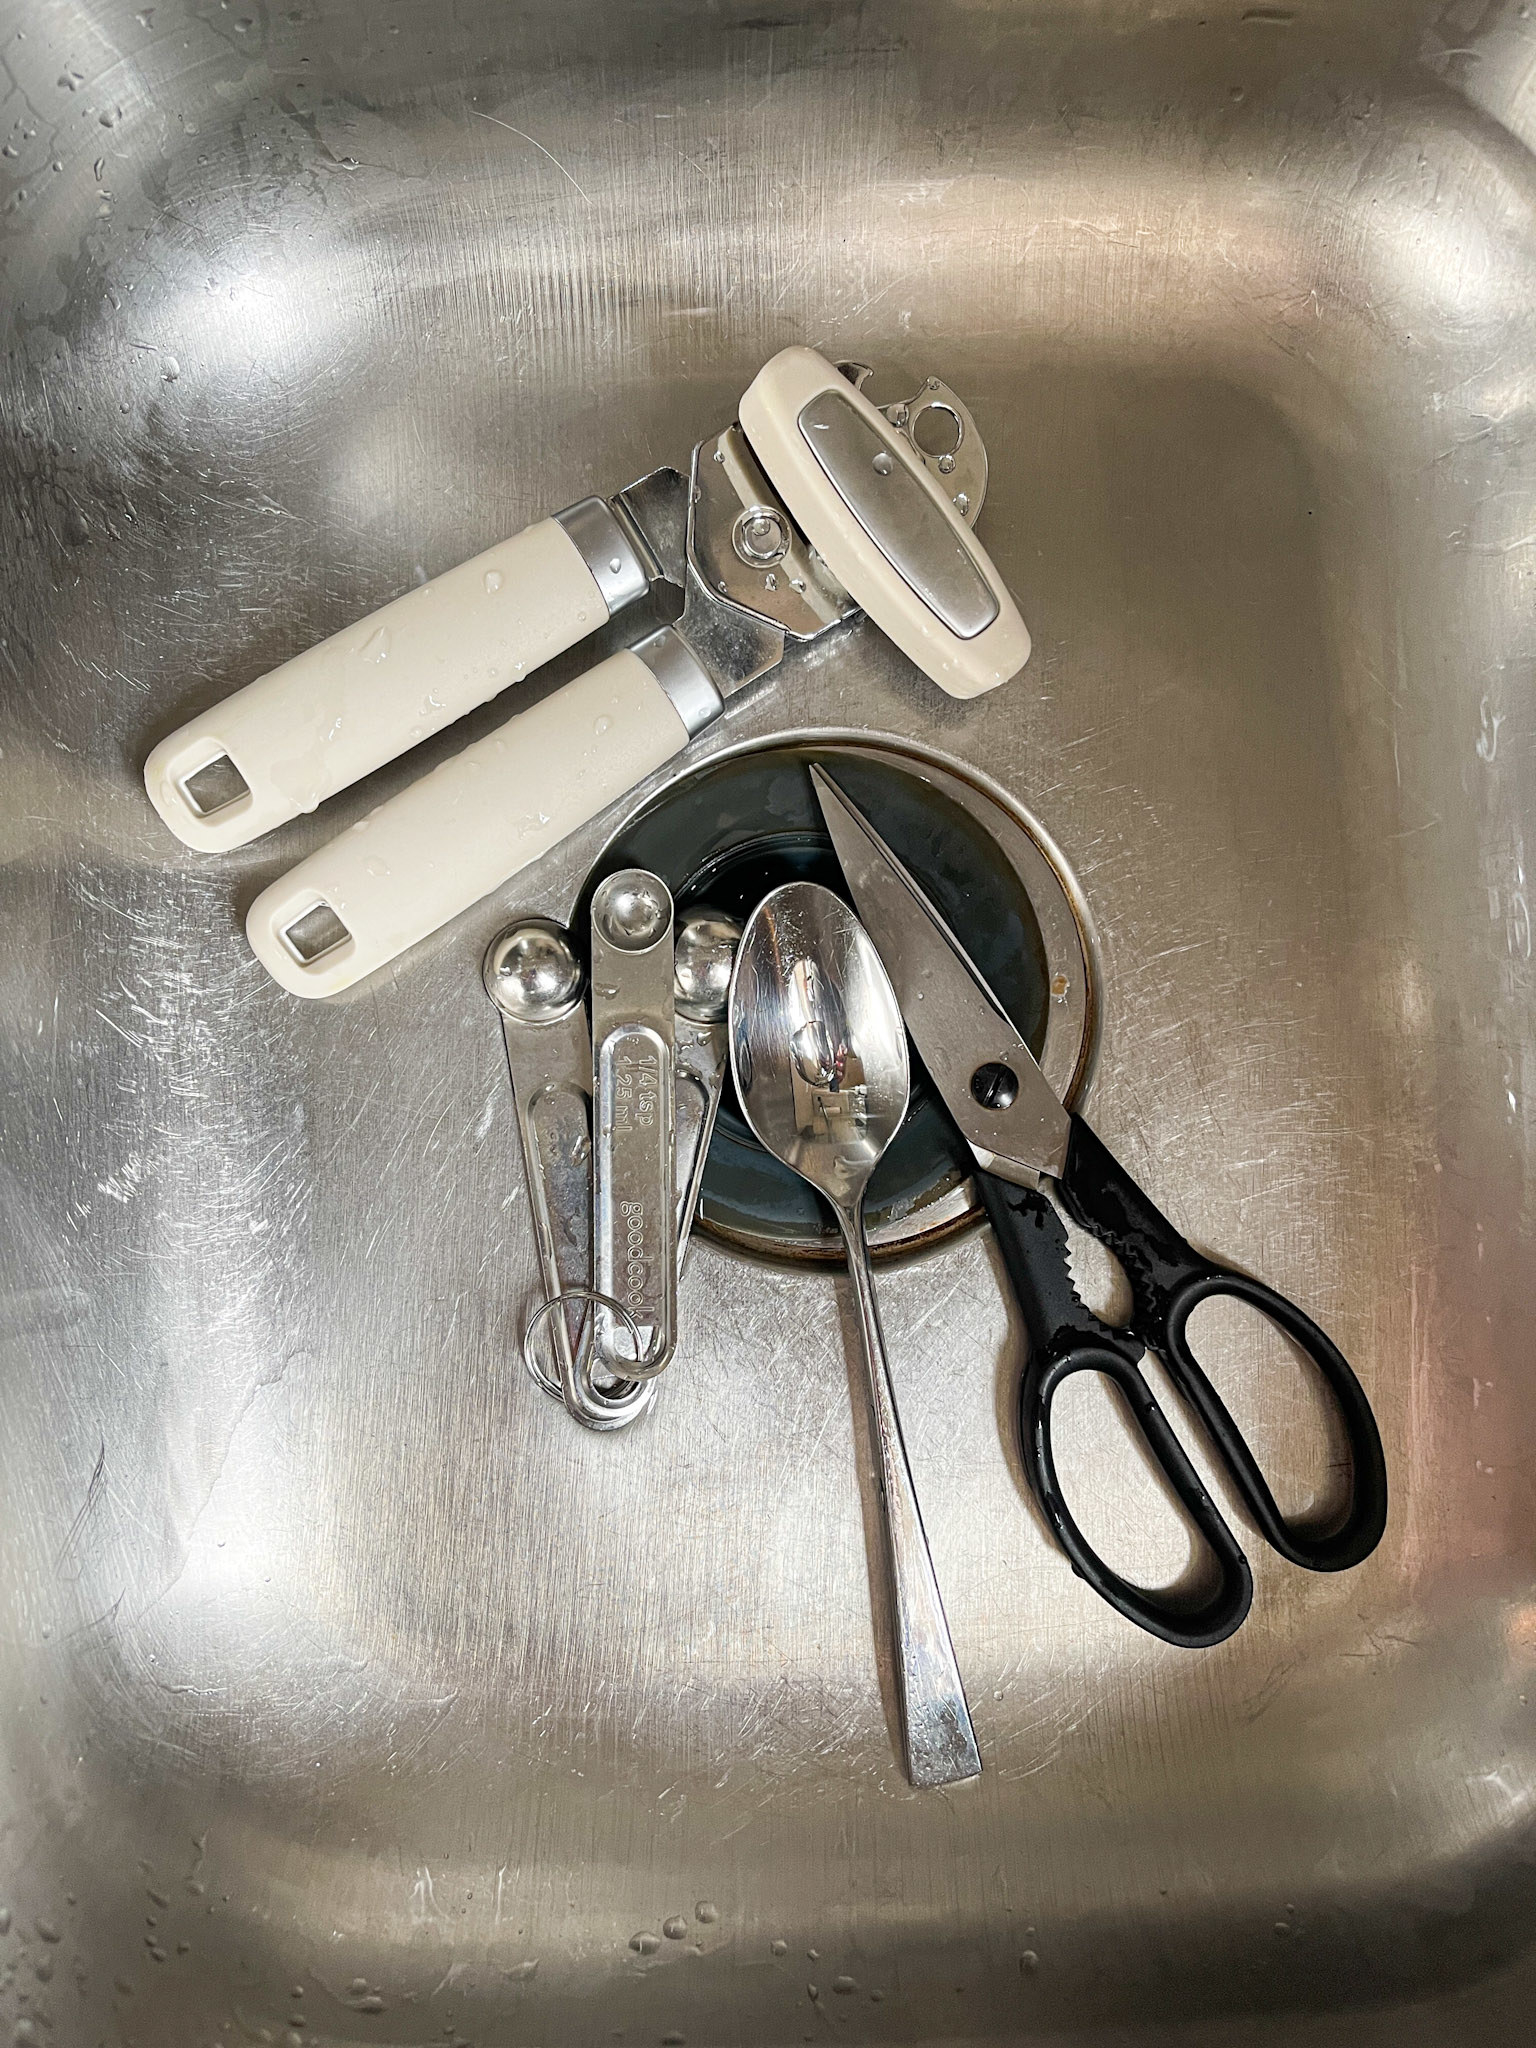 can opener, measuring spoons, teaspoon, and scissors sitting in a steel sink